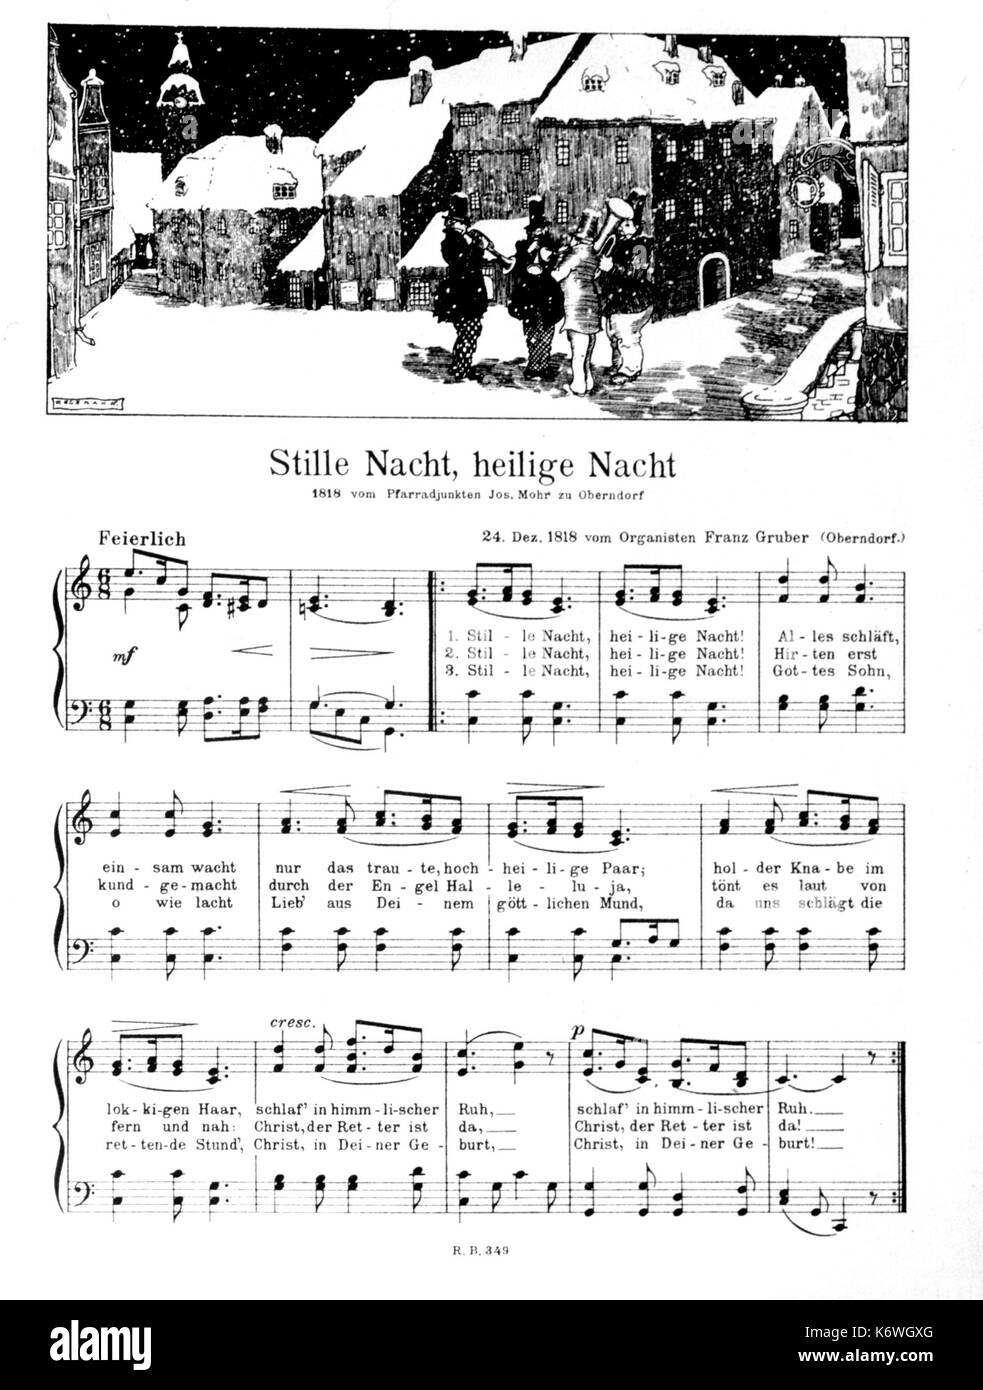 Xmas Carol. Stille Nacht, Heilige Nacht Franz Gruber 24 Dic 1818. (Silent Night) parole e musica da Weihnacht's Sang und Klang. Parole e punteggio Foto Stock